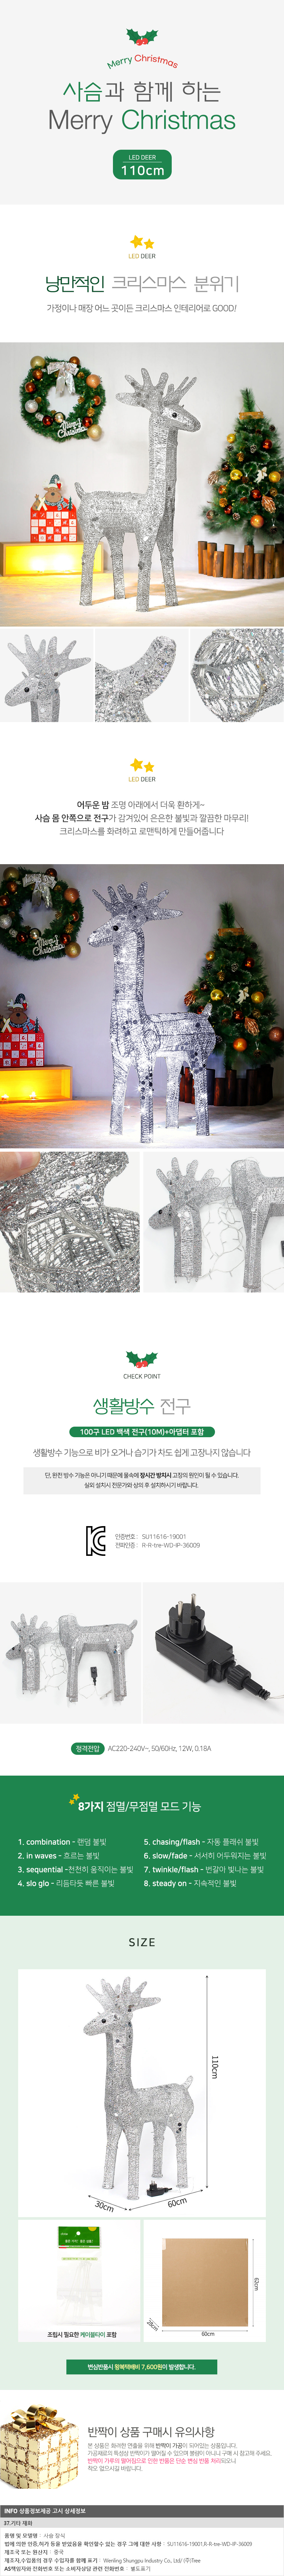 100cm LED 사슴트리 실버 크리스마스 성탄 장식소품